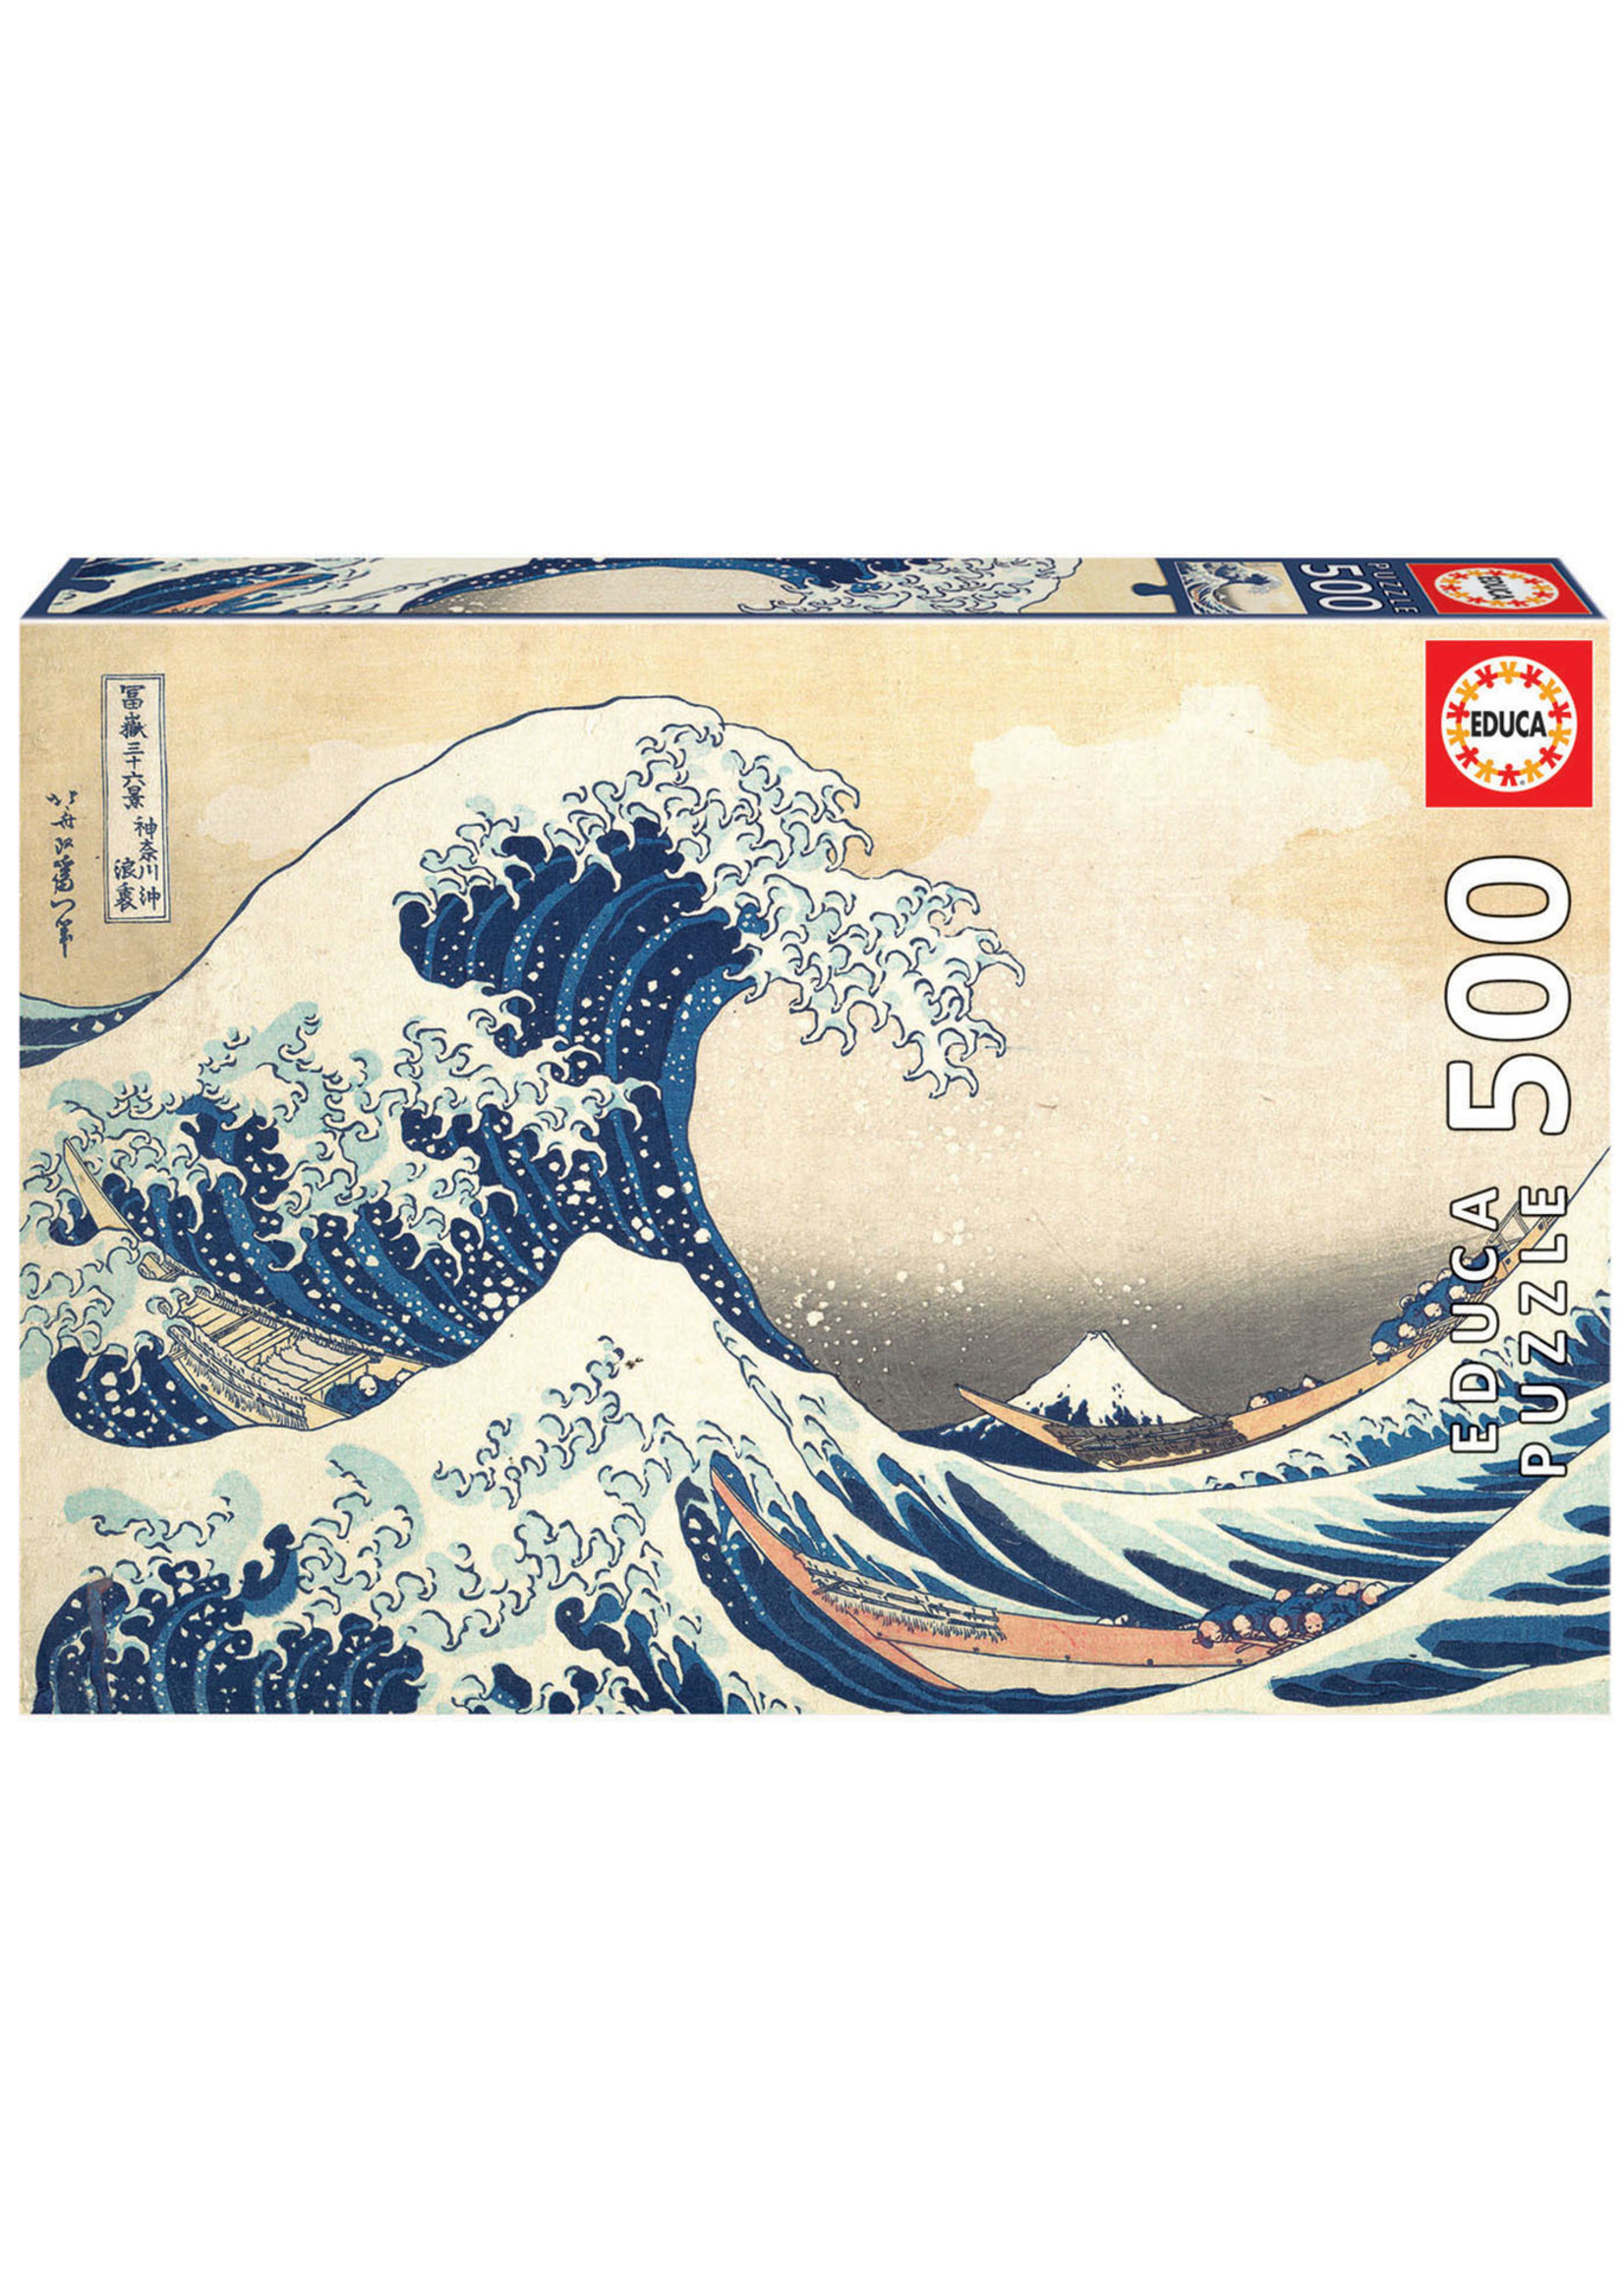 Educa "The Great Wave of Kanagawa" 500 Piece Puzzle